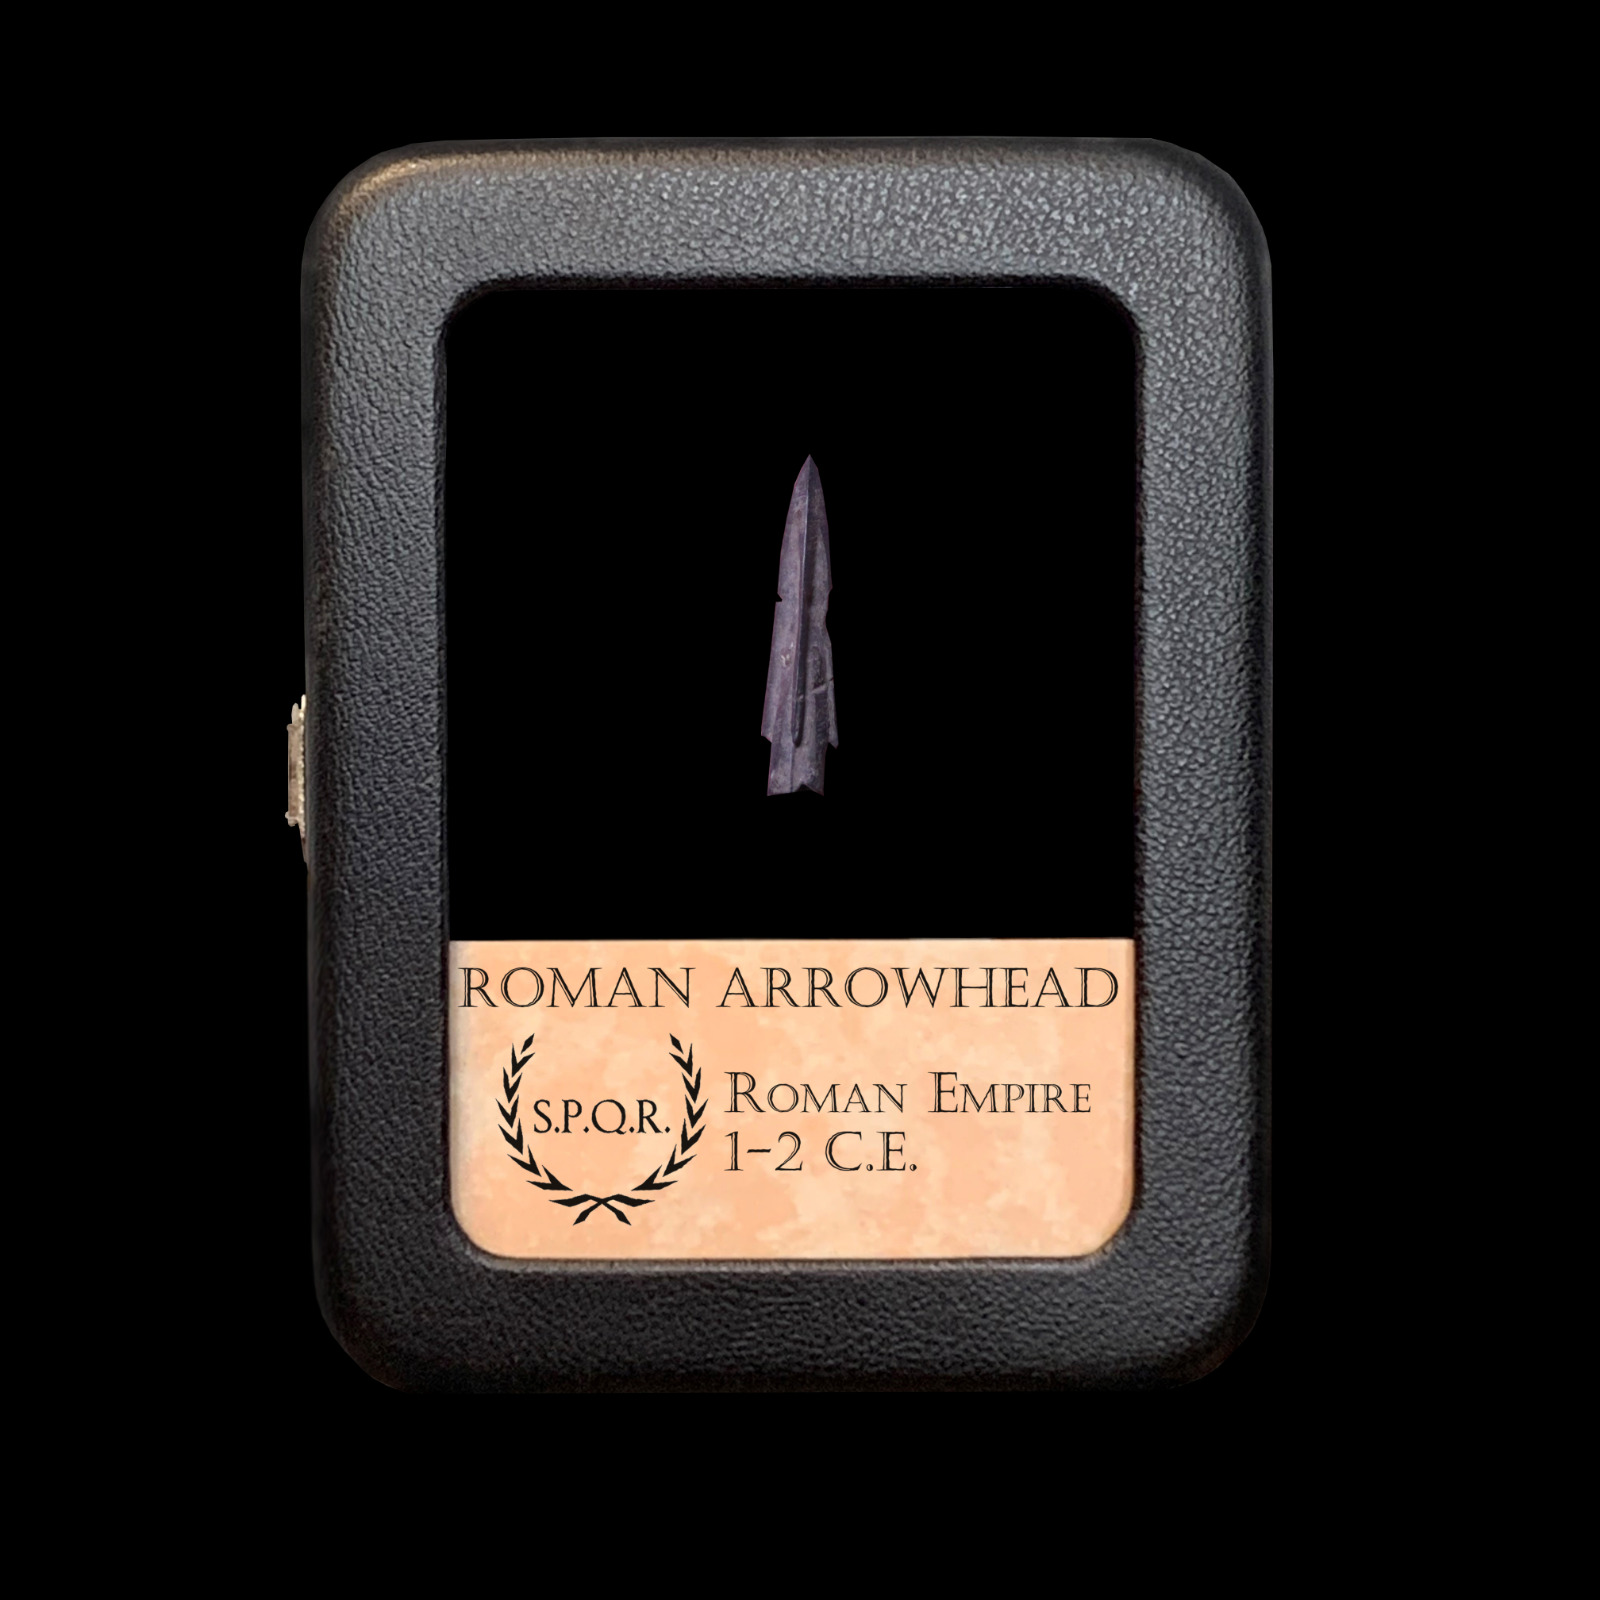 RARE Roman Empire Arrowhead - 1-2 C.E. - With Display Case